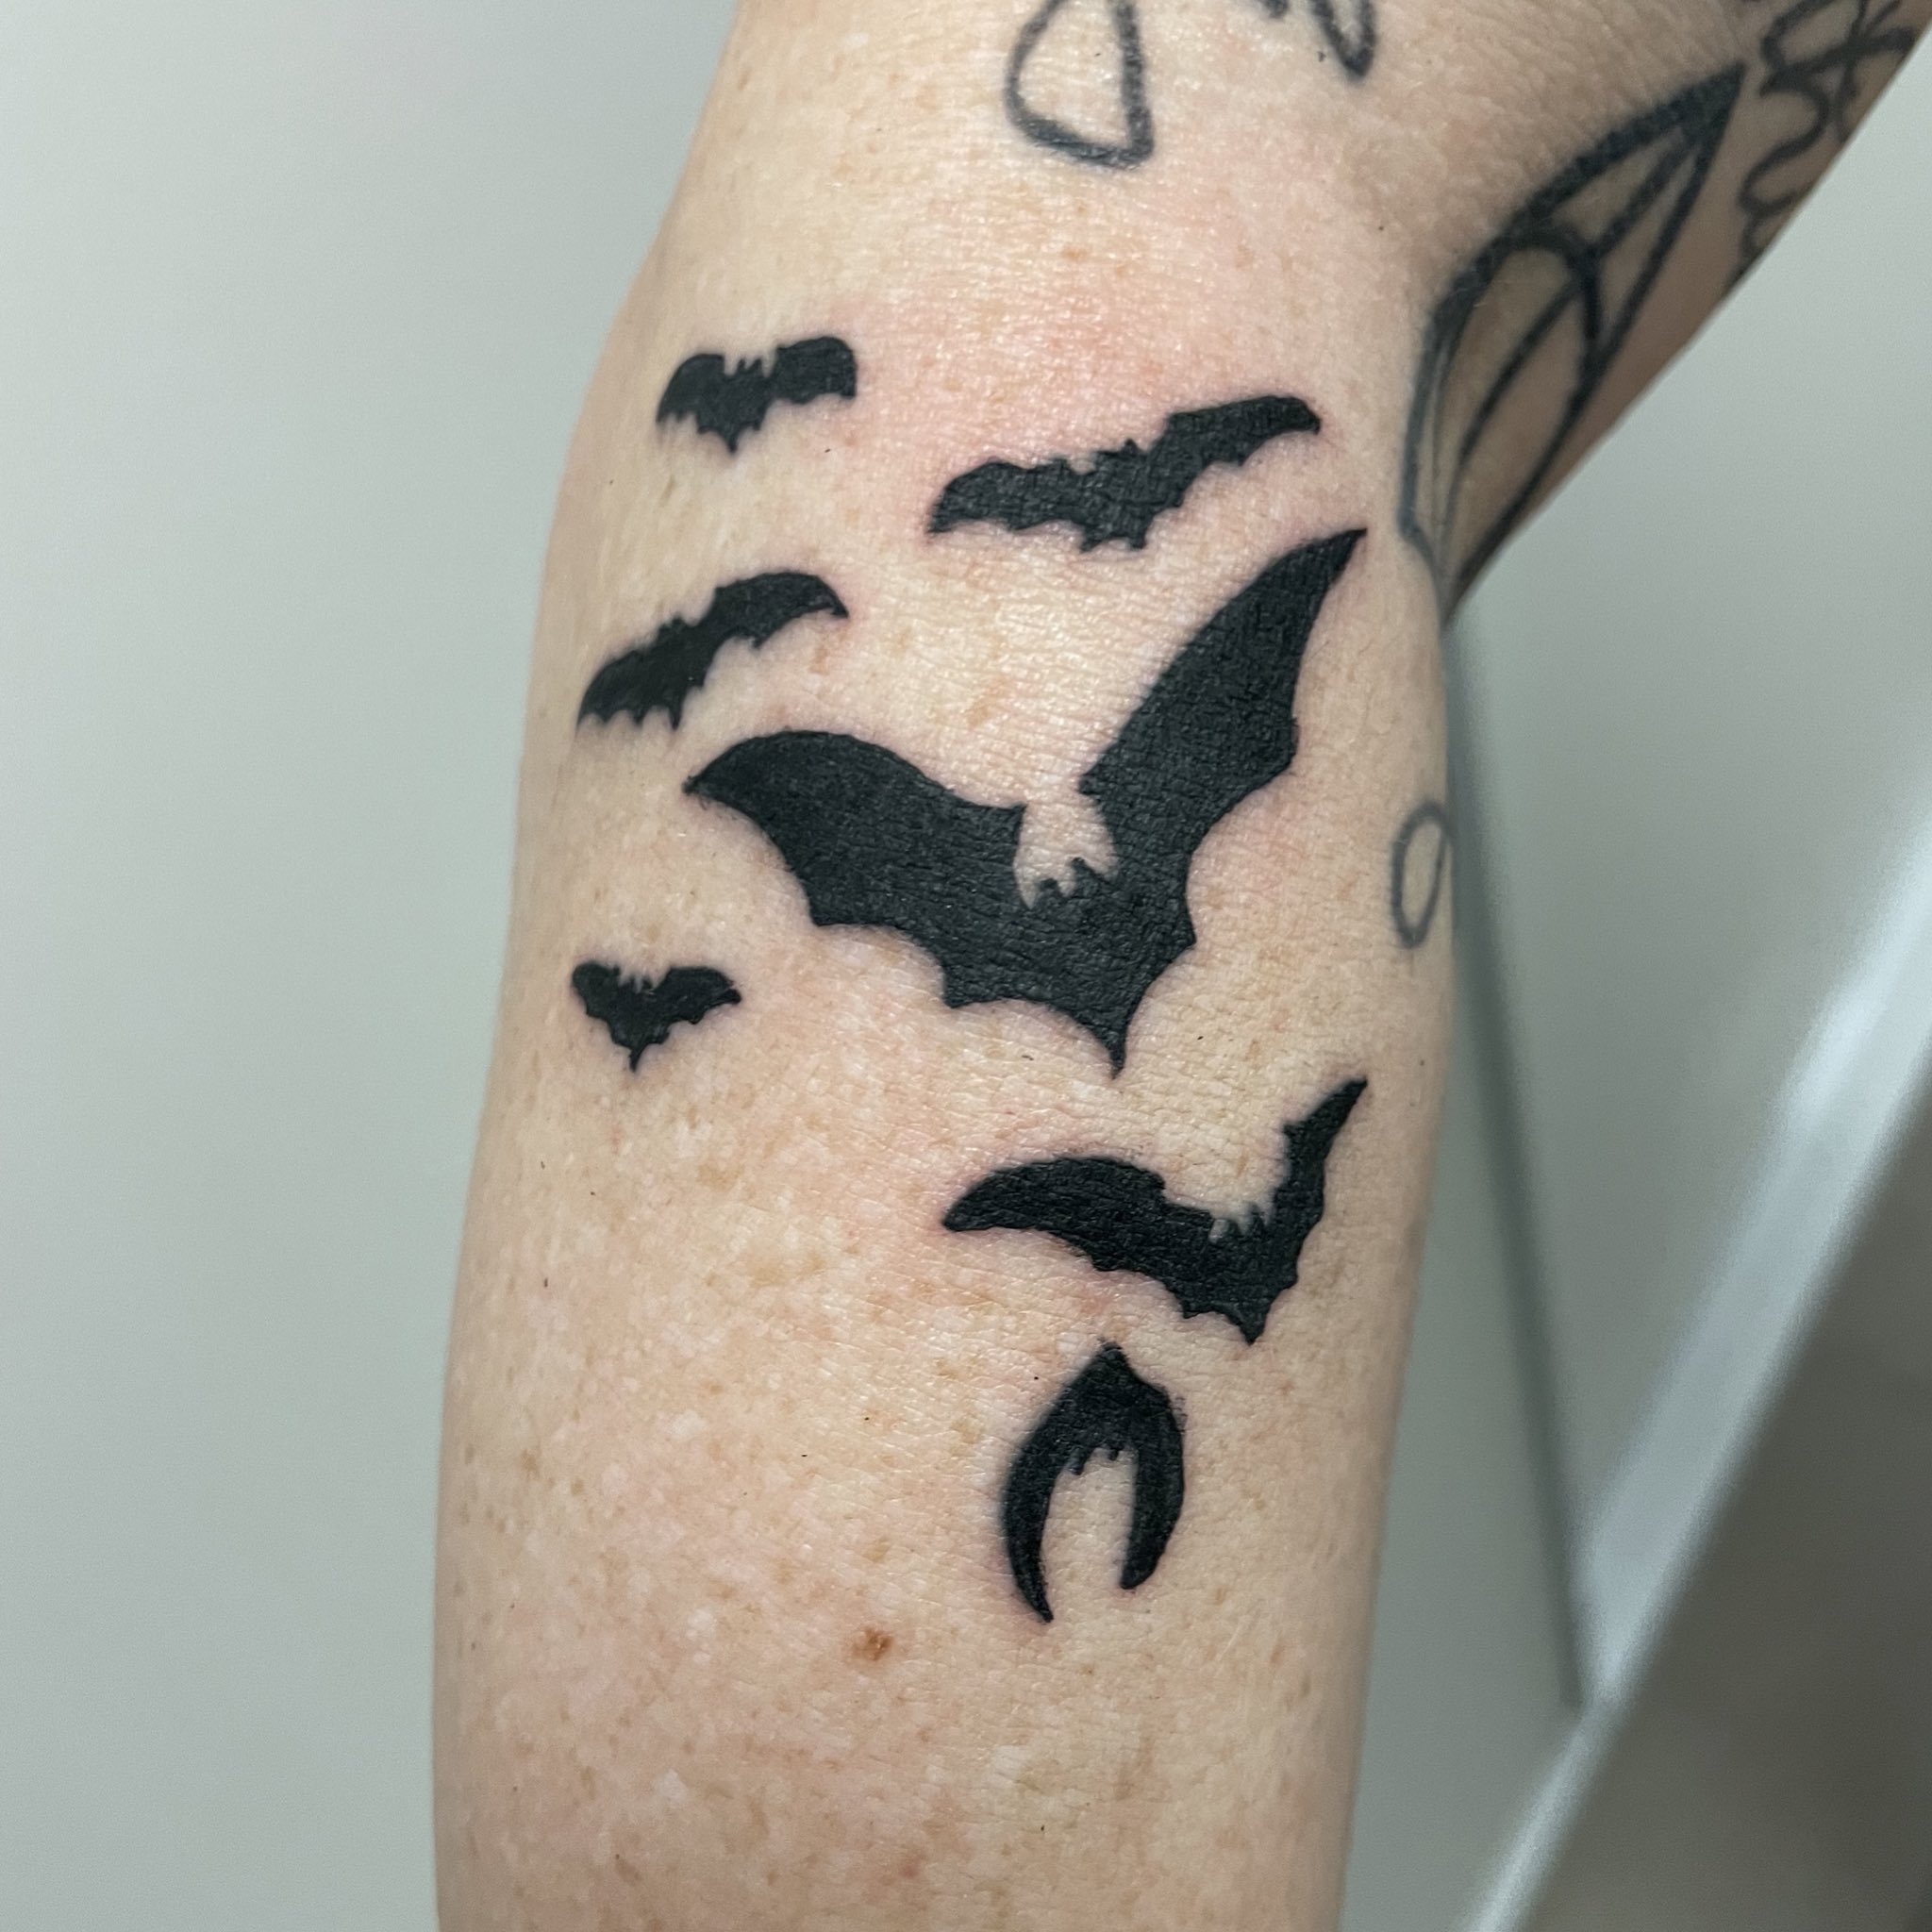 I turned Eddies bat tattoo into Embroidered patches  rEddiemunson